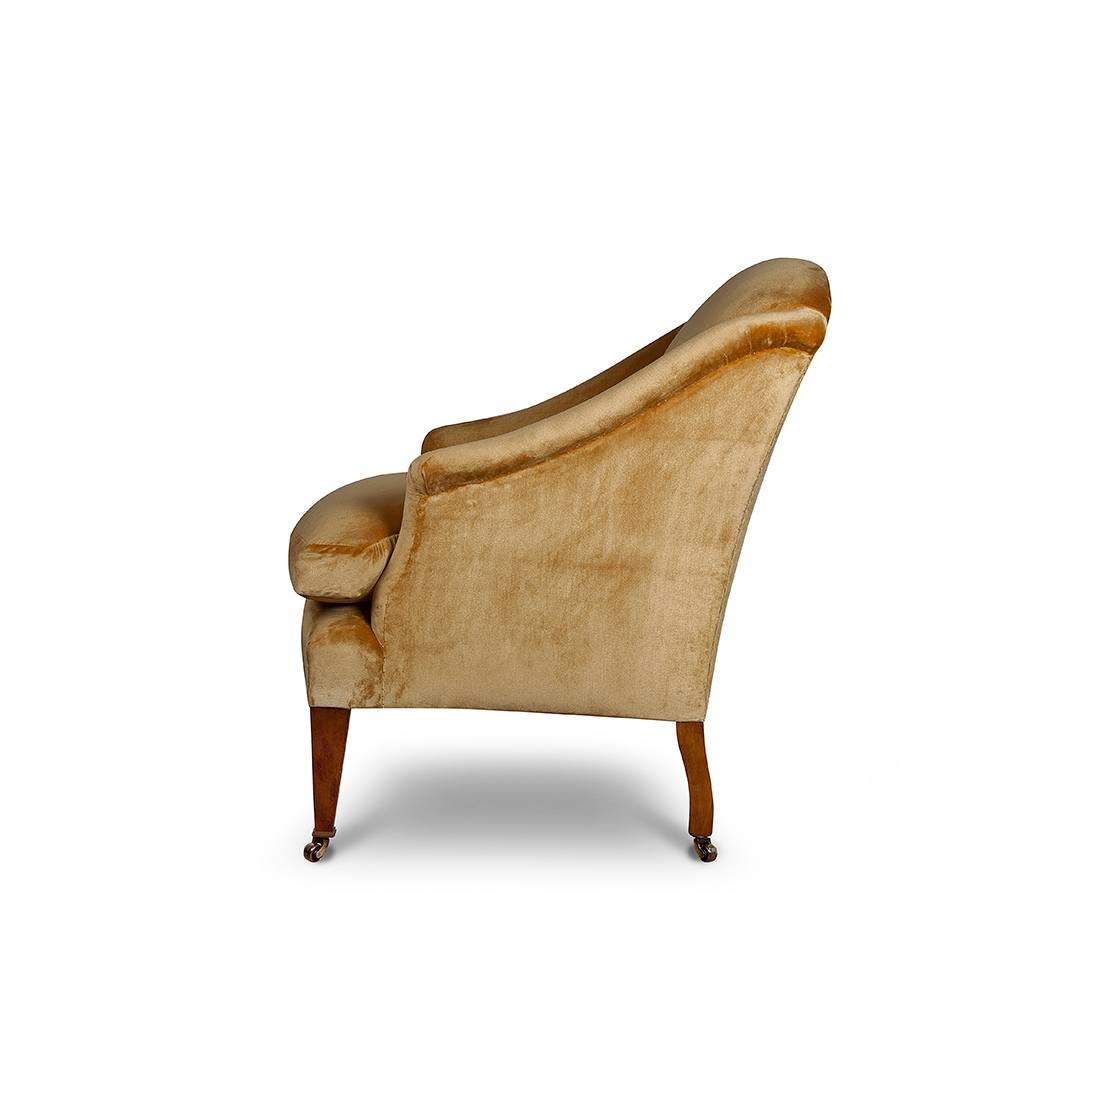 Fielding chair in Capri silk velvet - Almond - Beaumont & Fletcher